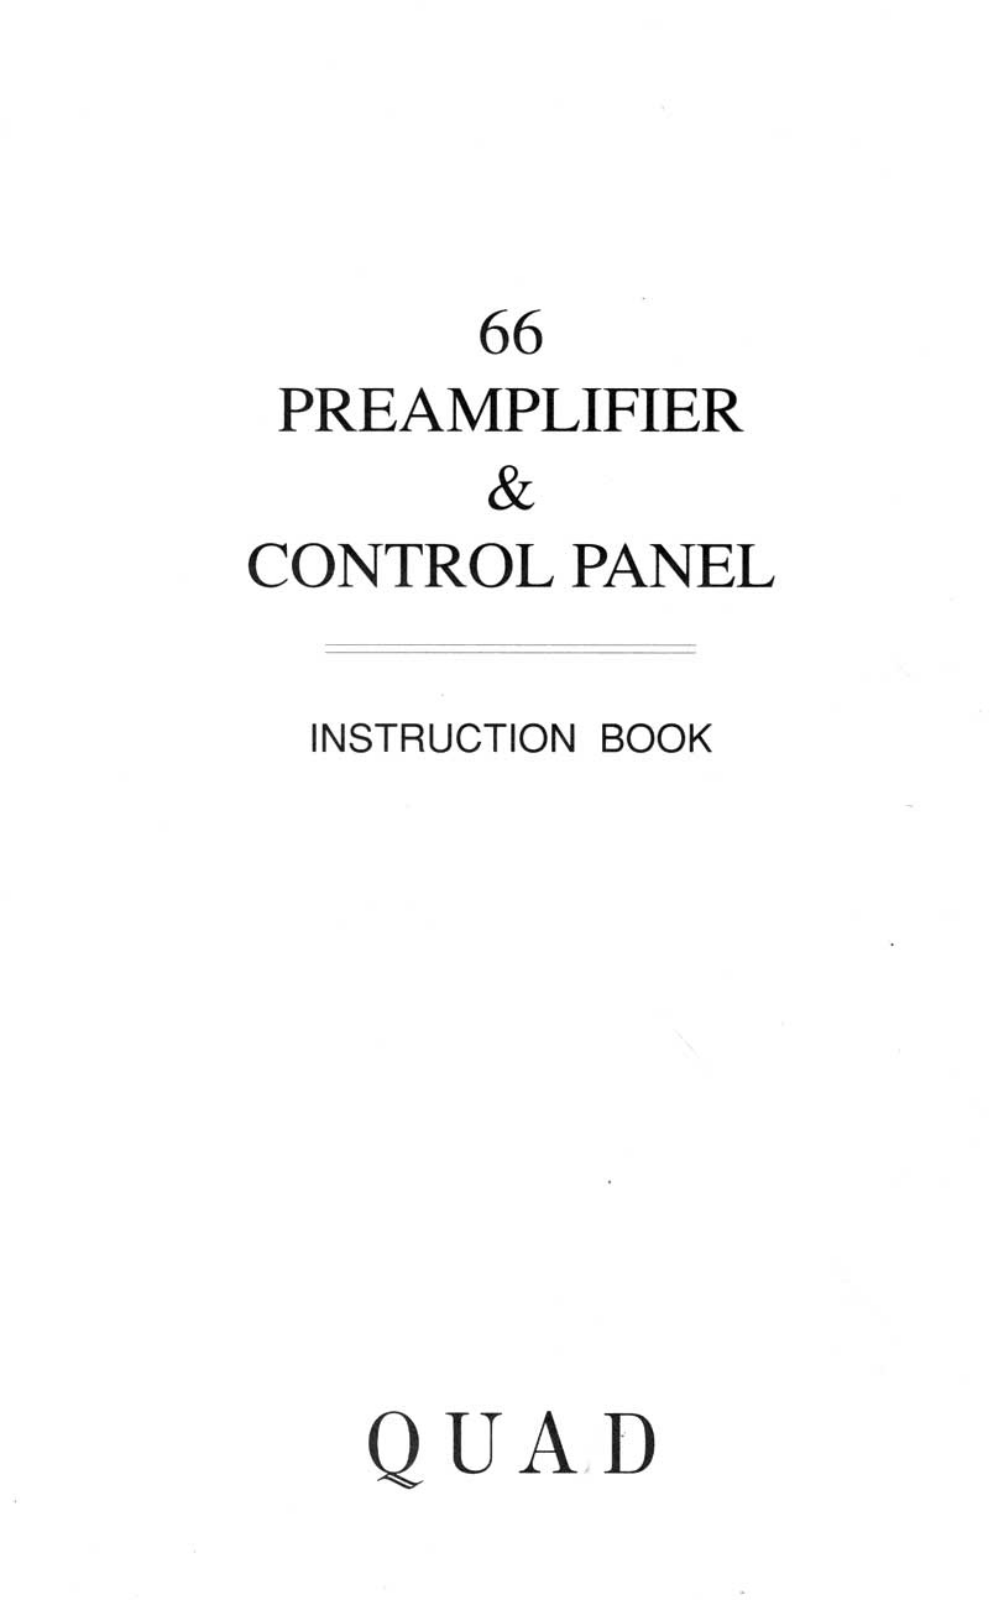 Quad 66 PREAMPLIFIER Manual